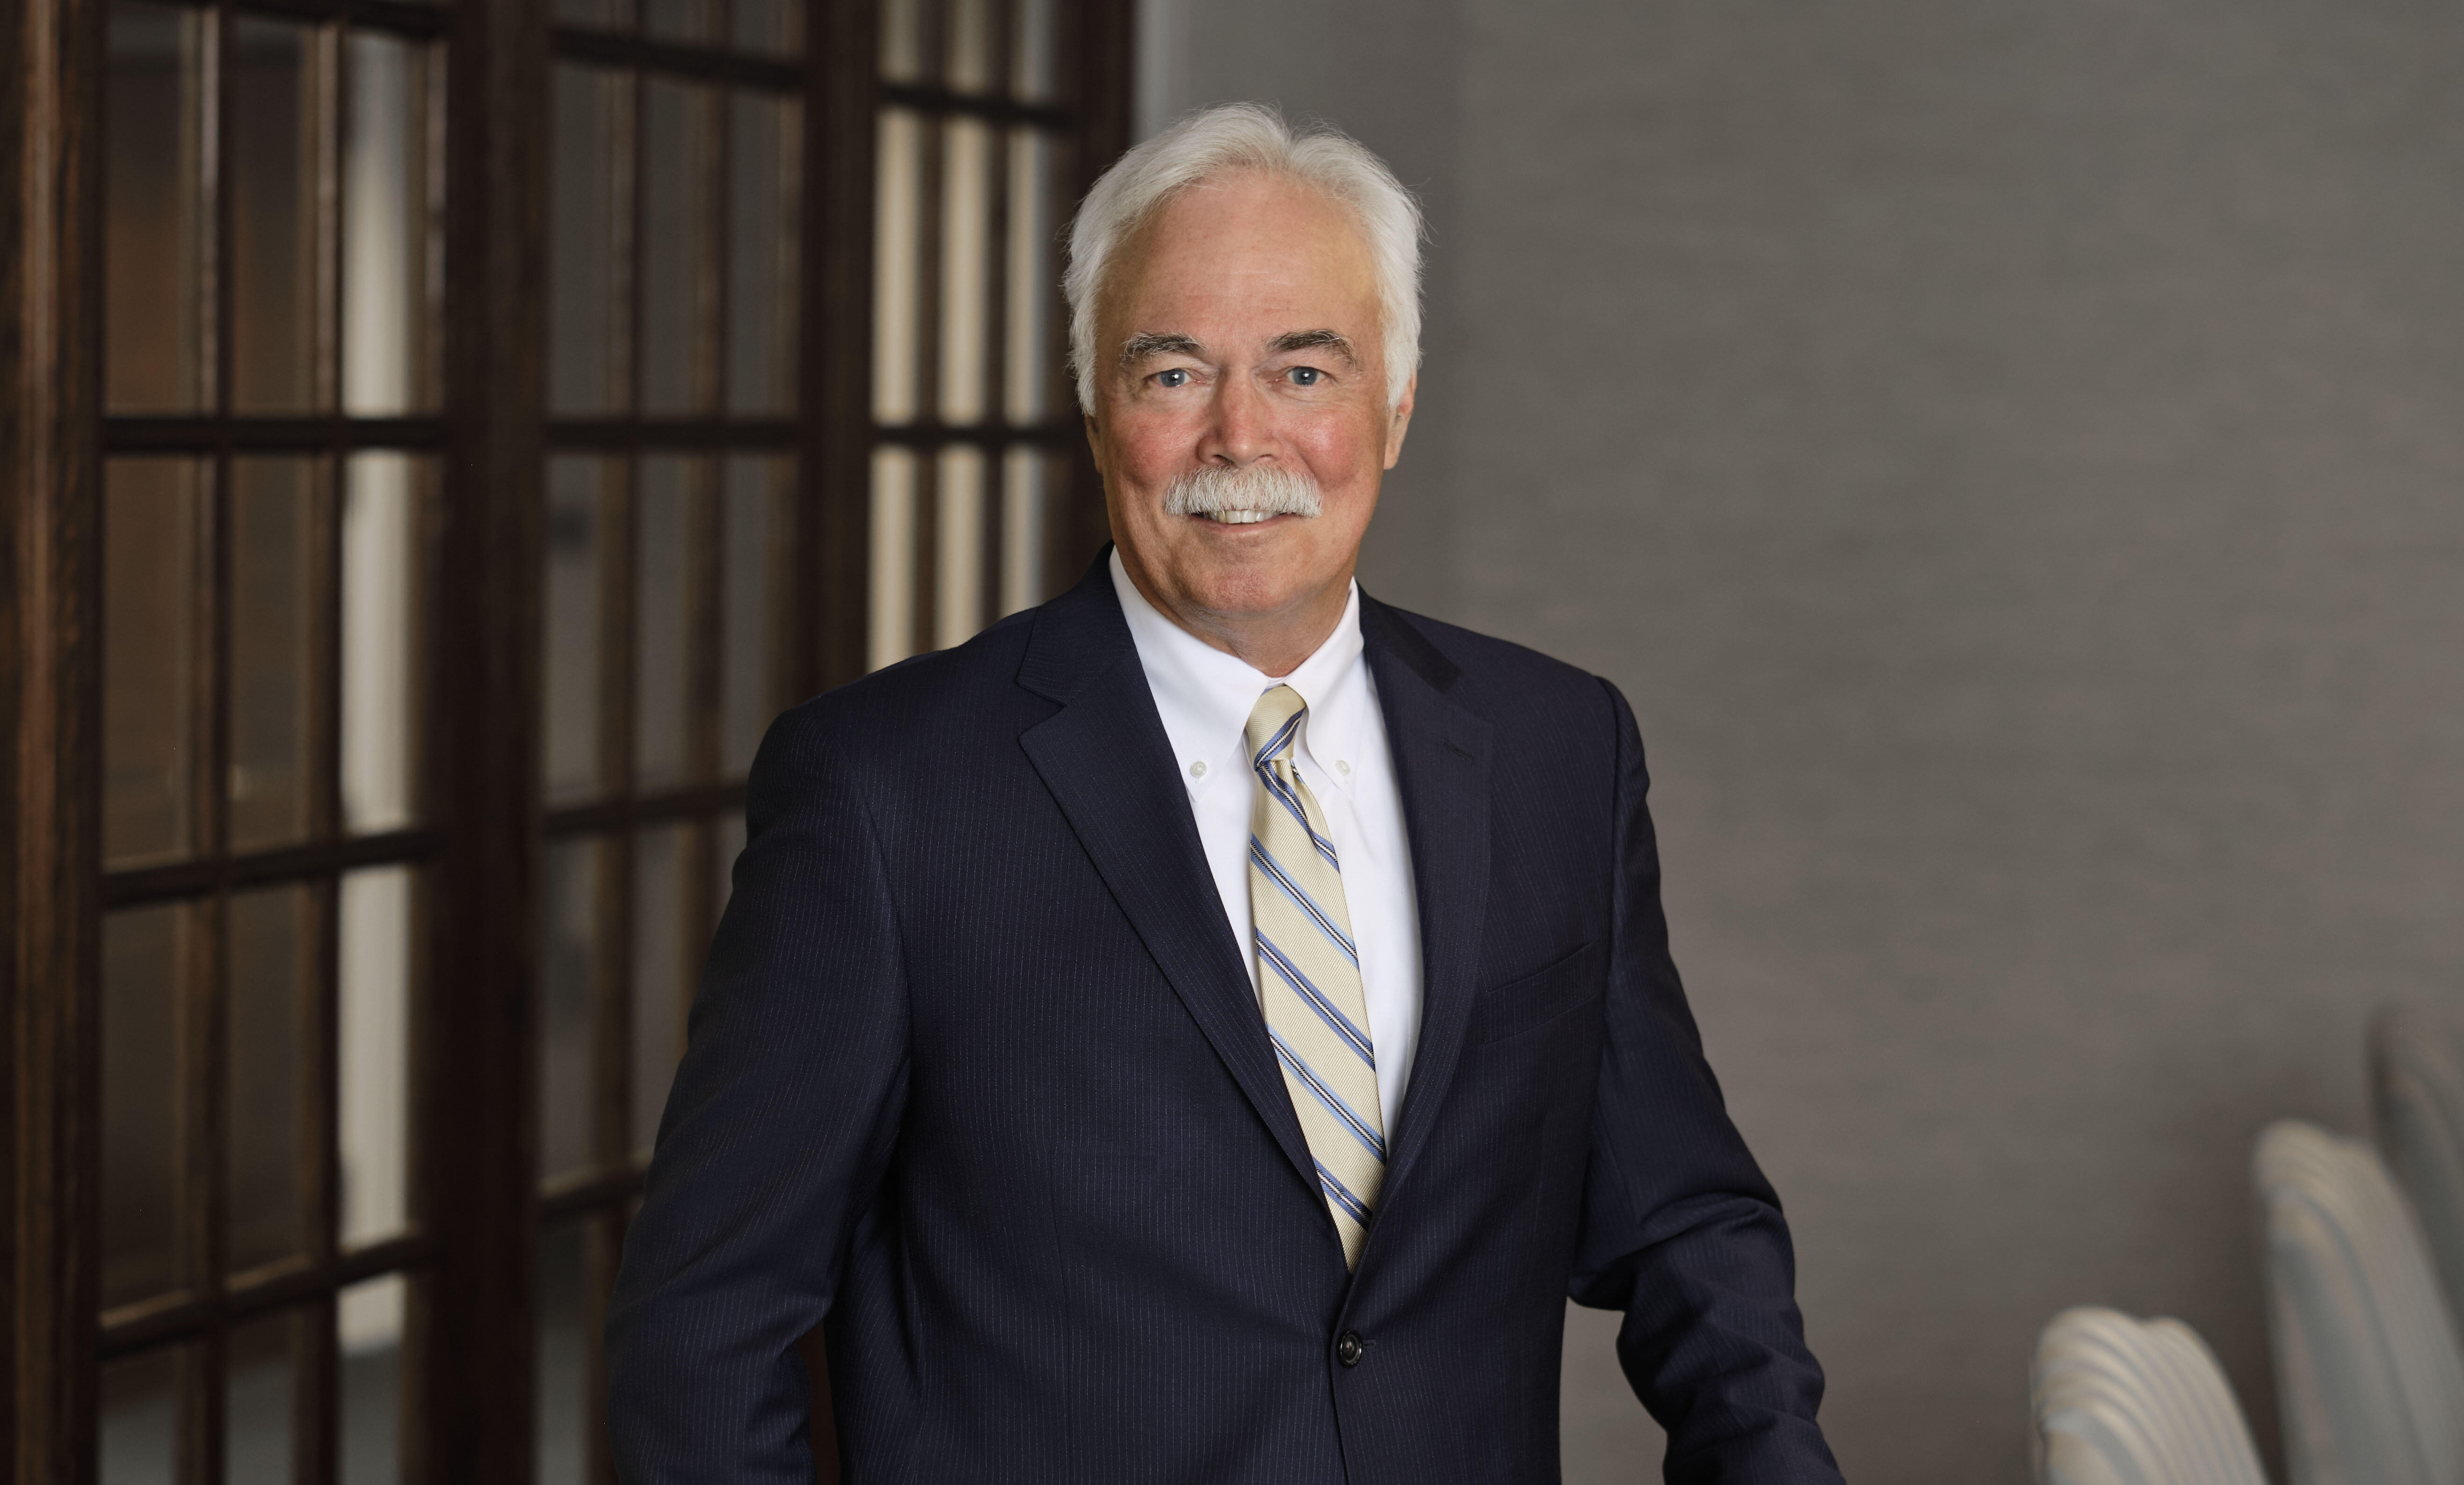 Attorney James O’Hara – Lawyer Jim O’Hara